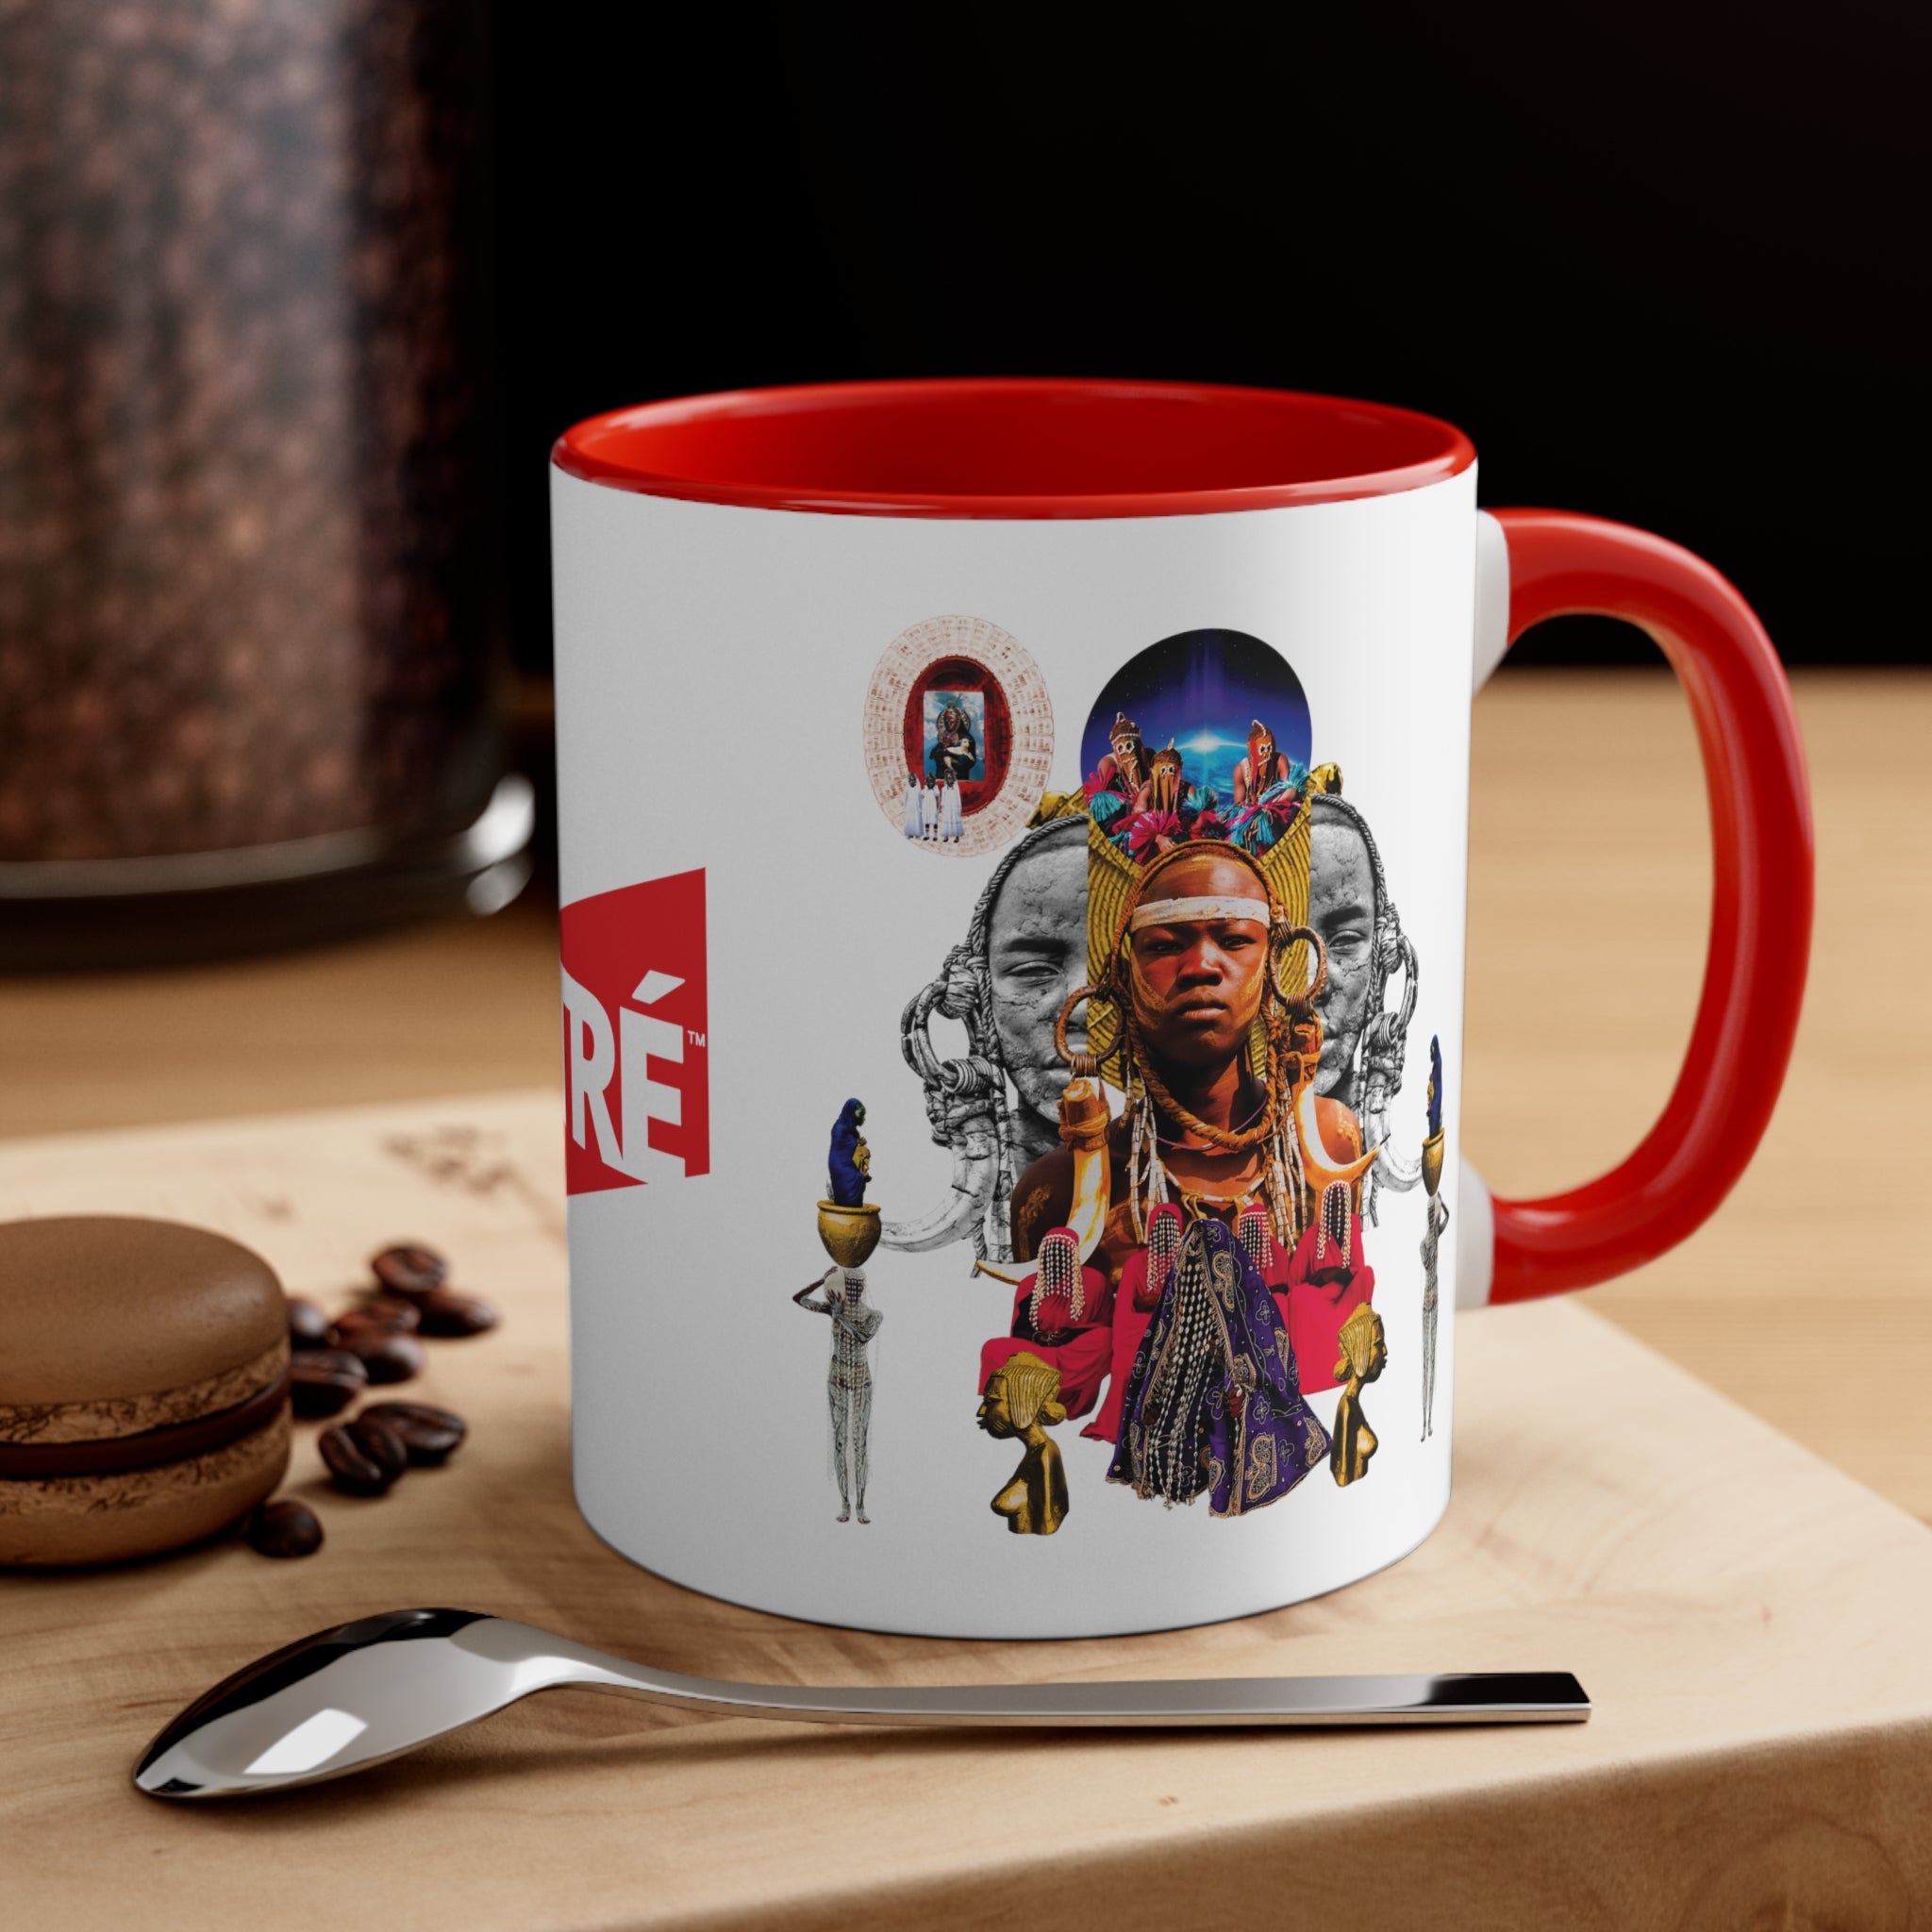 Accent Coffee Mug, 11oz, Holy Grail